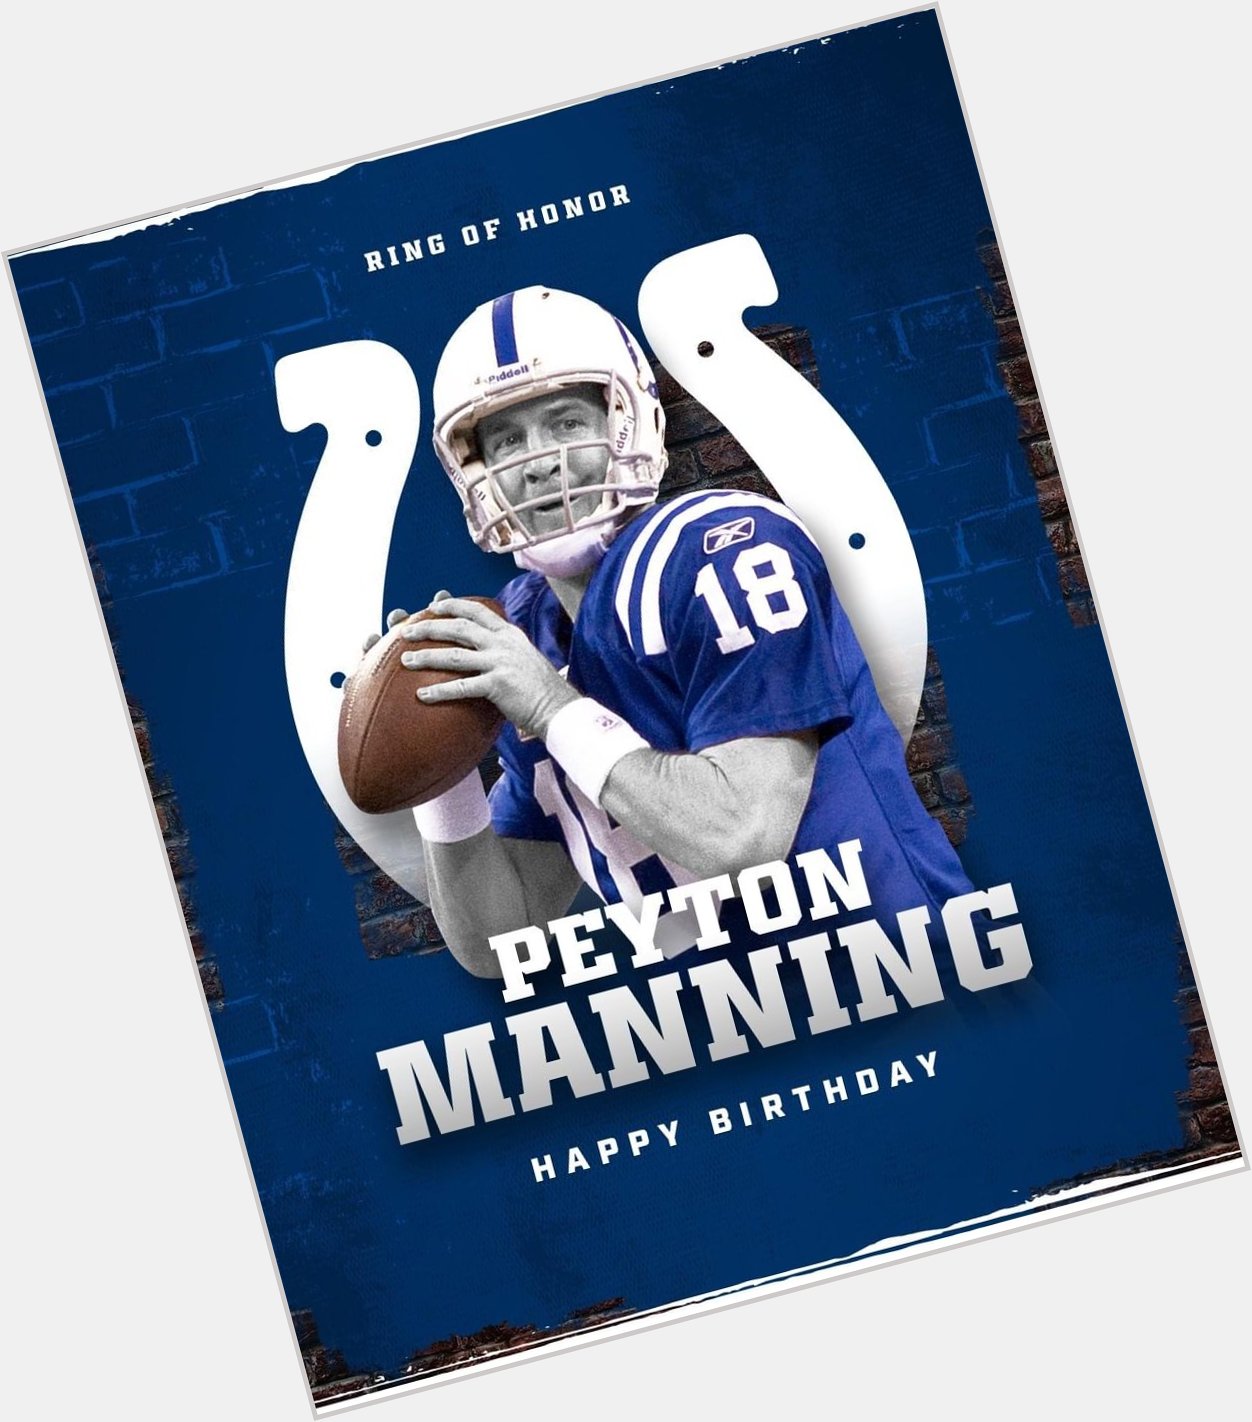 Happy Birthday Peyton Manning. 